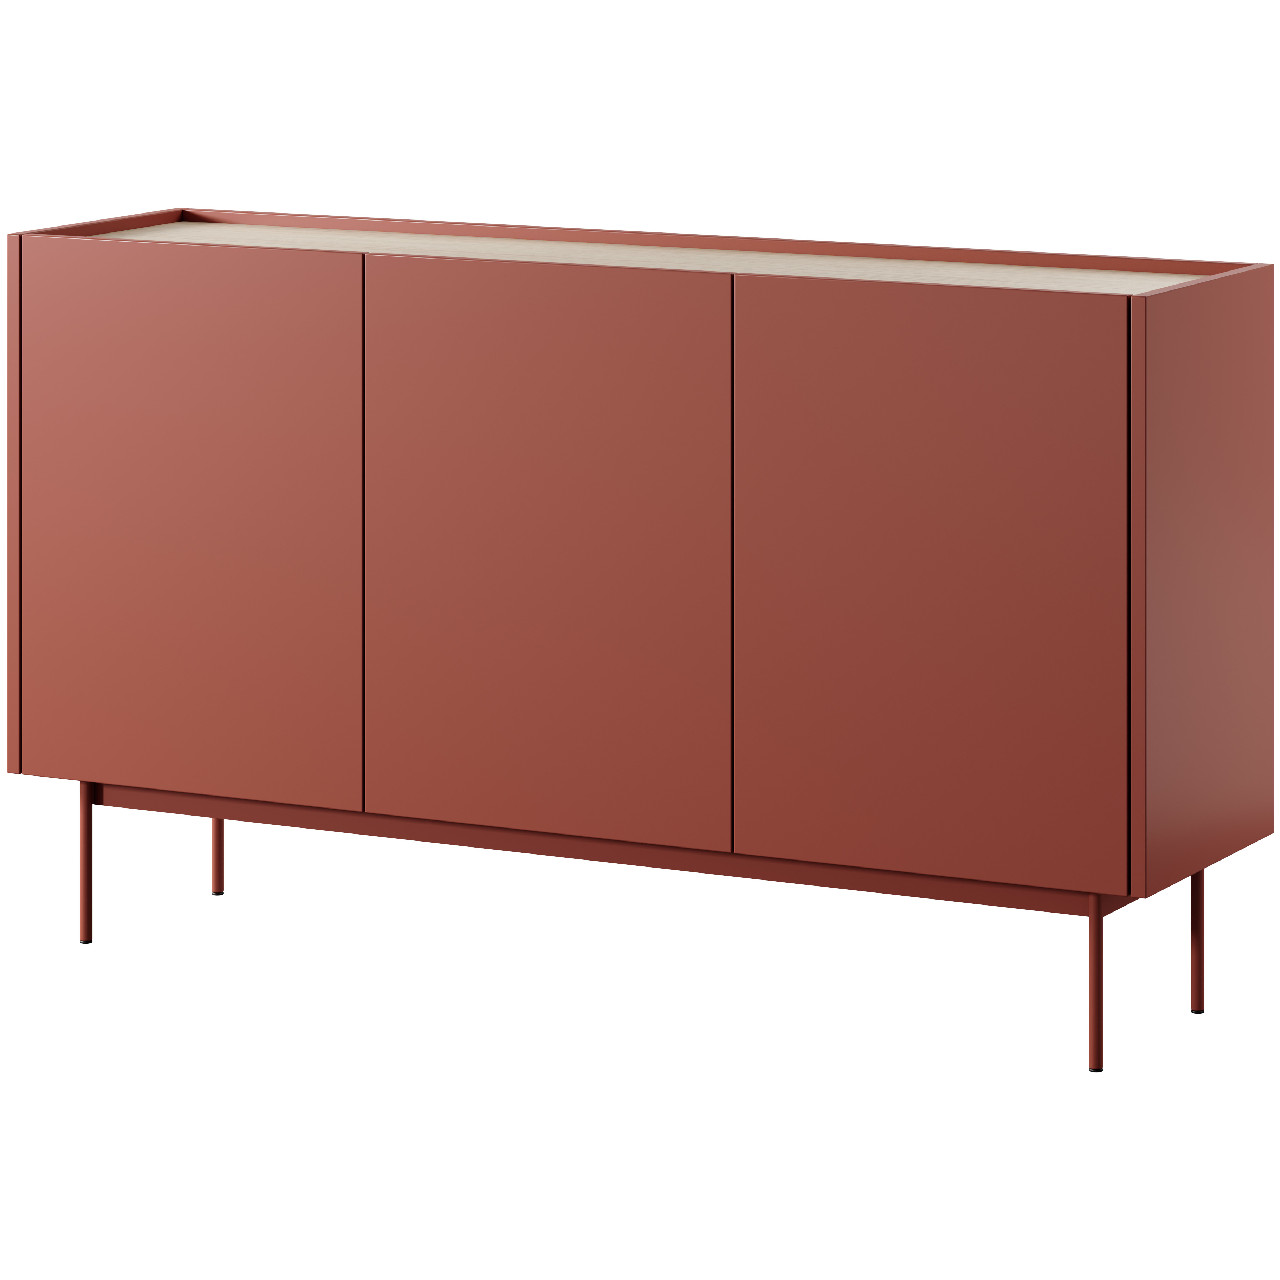 Storage cabinet COLOUR 02 ceramic red / linea oak